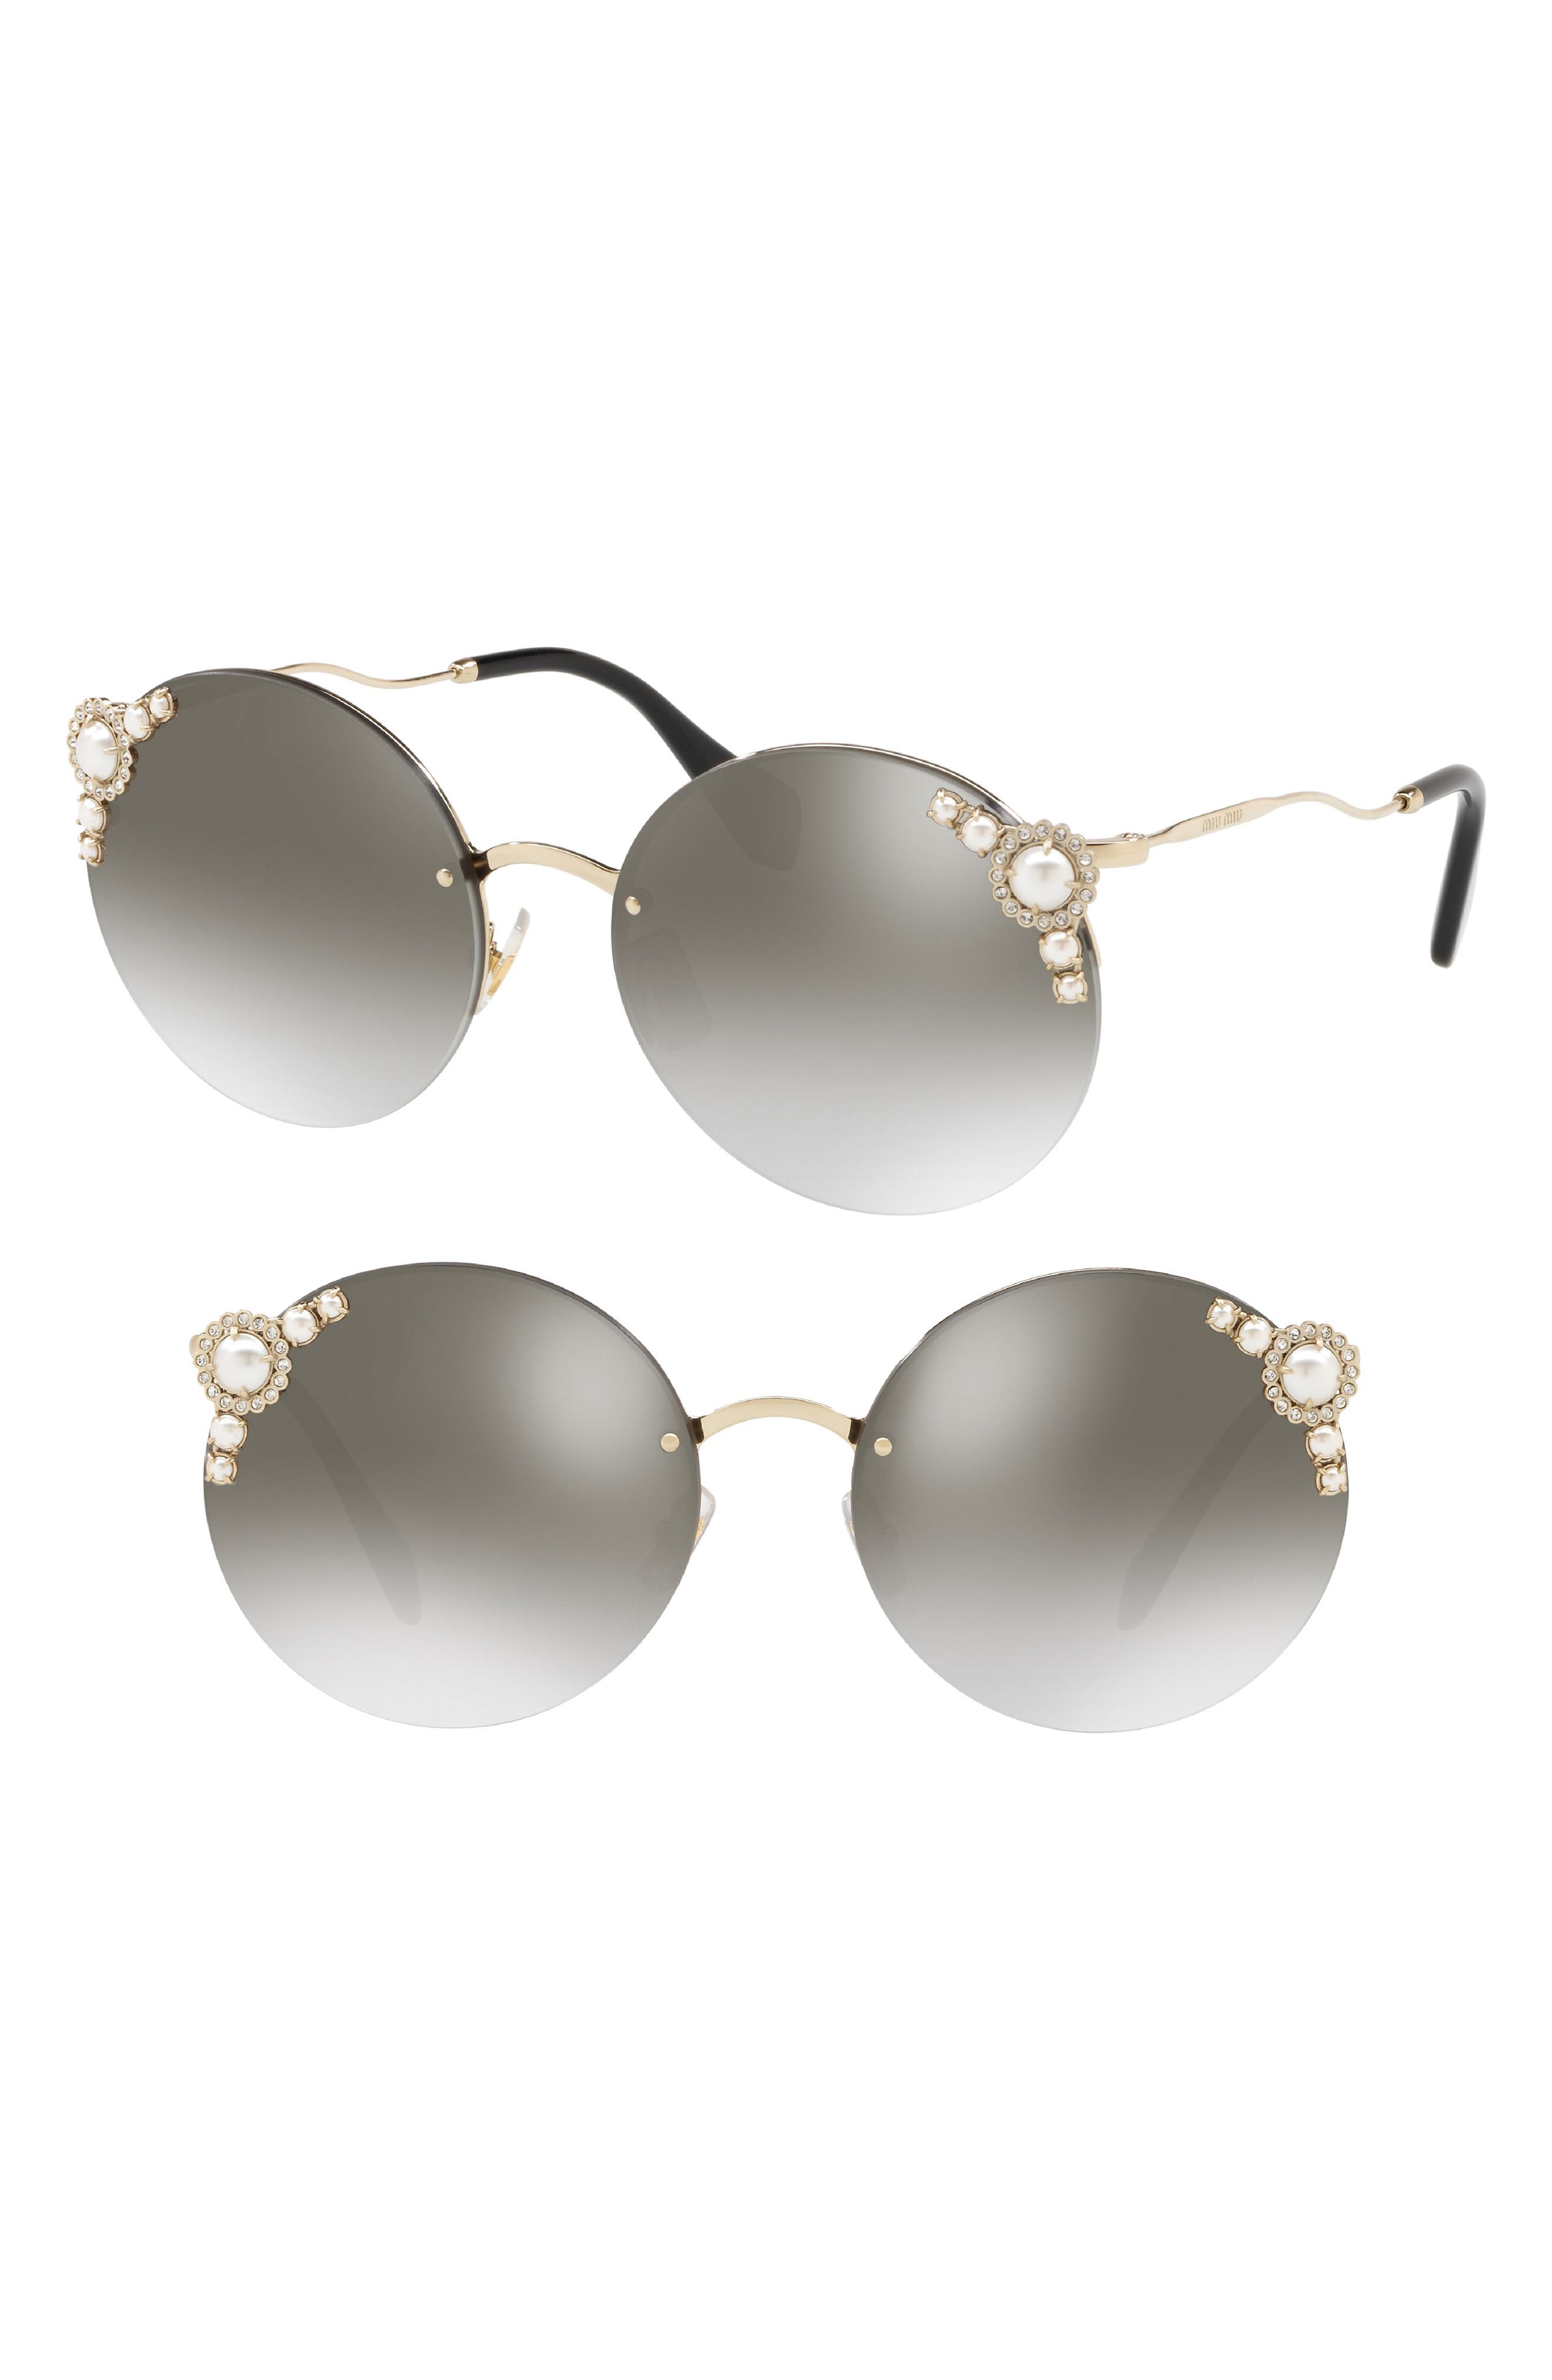 Miu Miu 60mm Gradient Embellished Sunglasses in Grey Gradient Mirror at Nordstrom